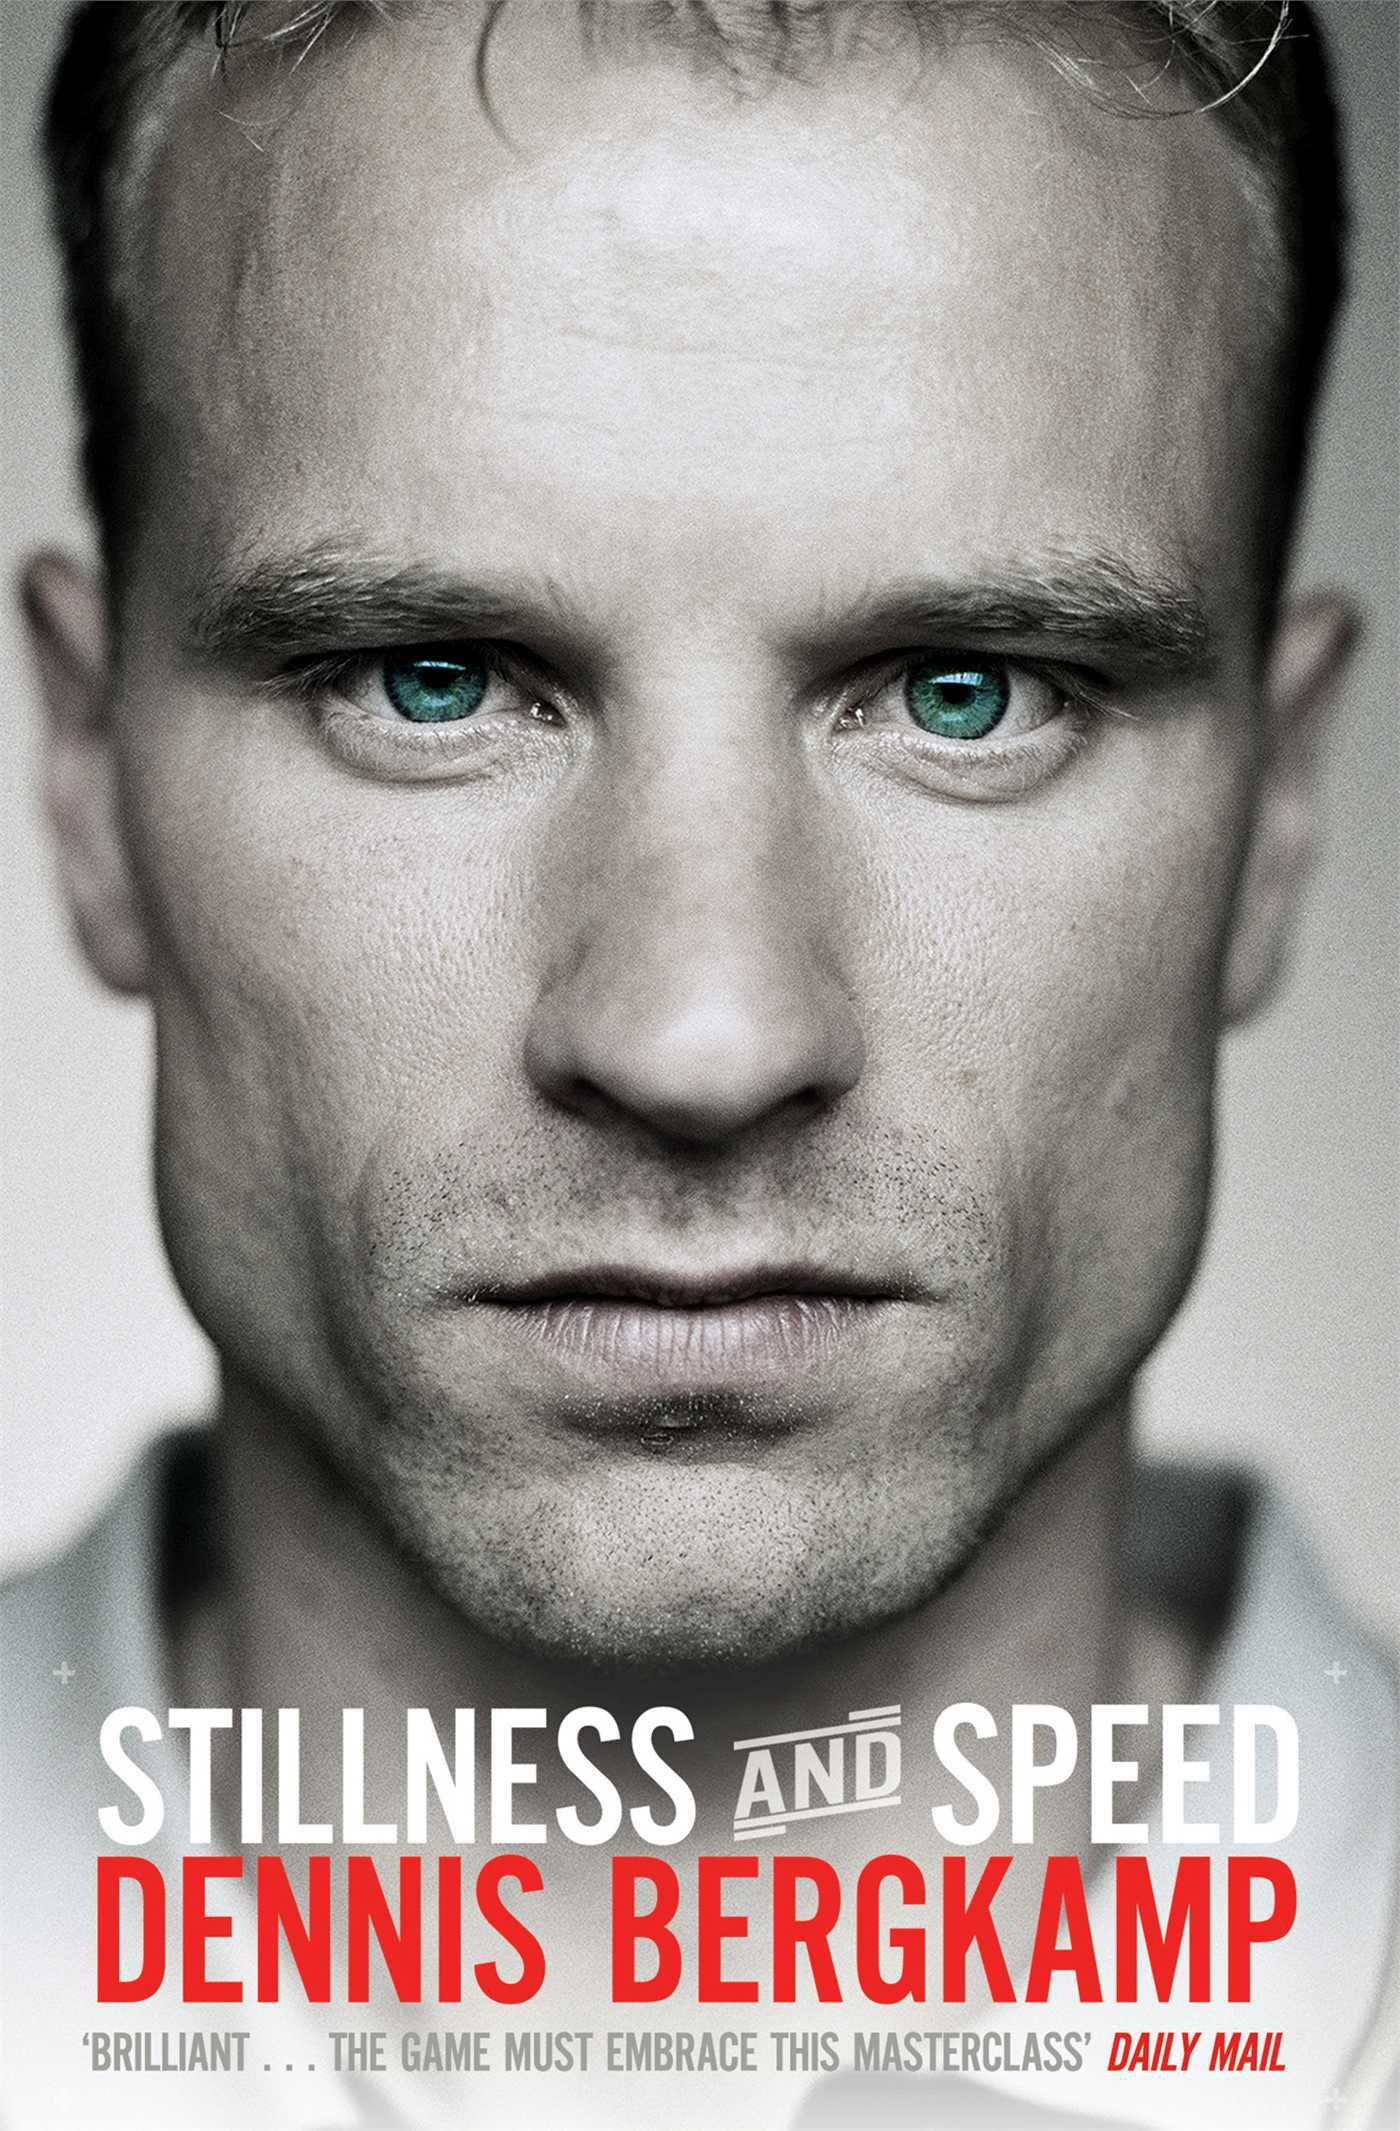 Stillness and Speed : My Story (Paperback)